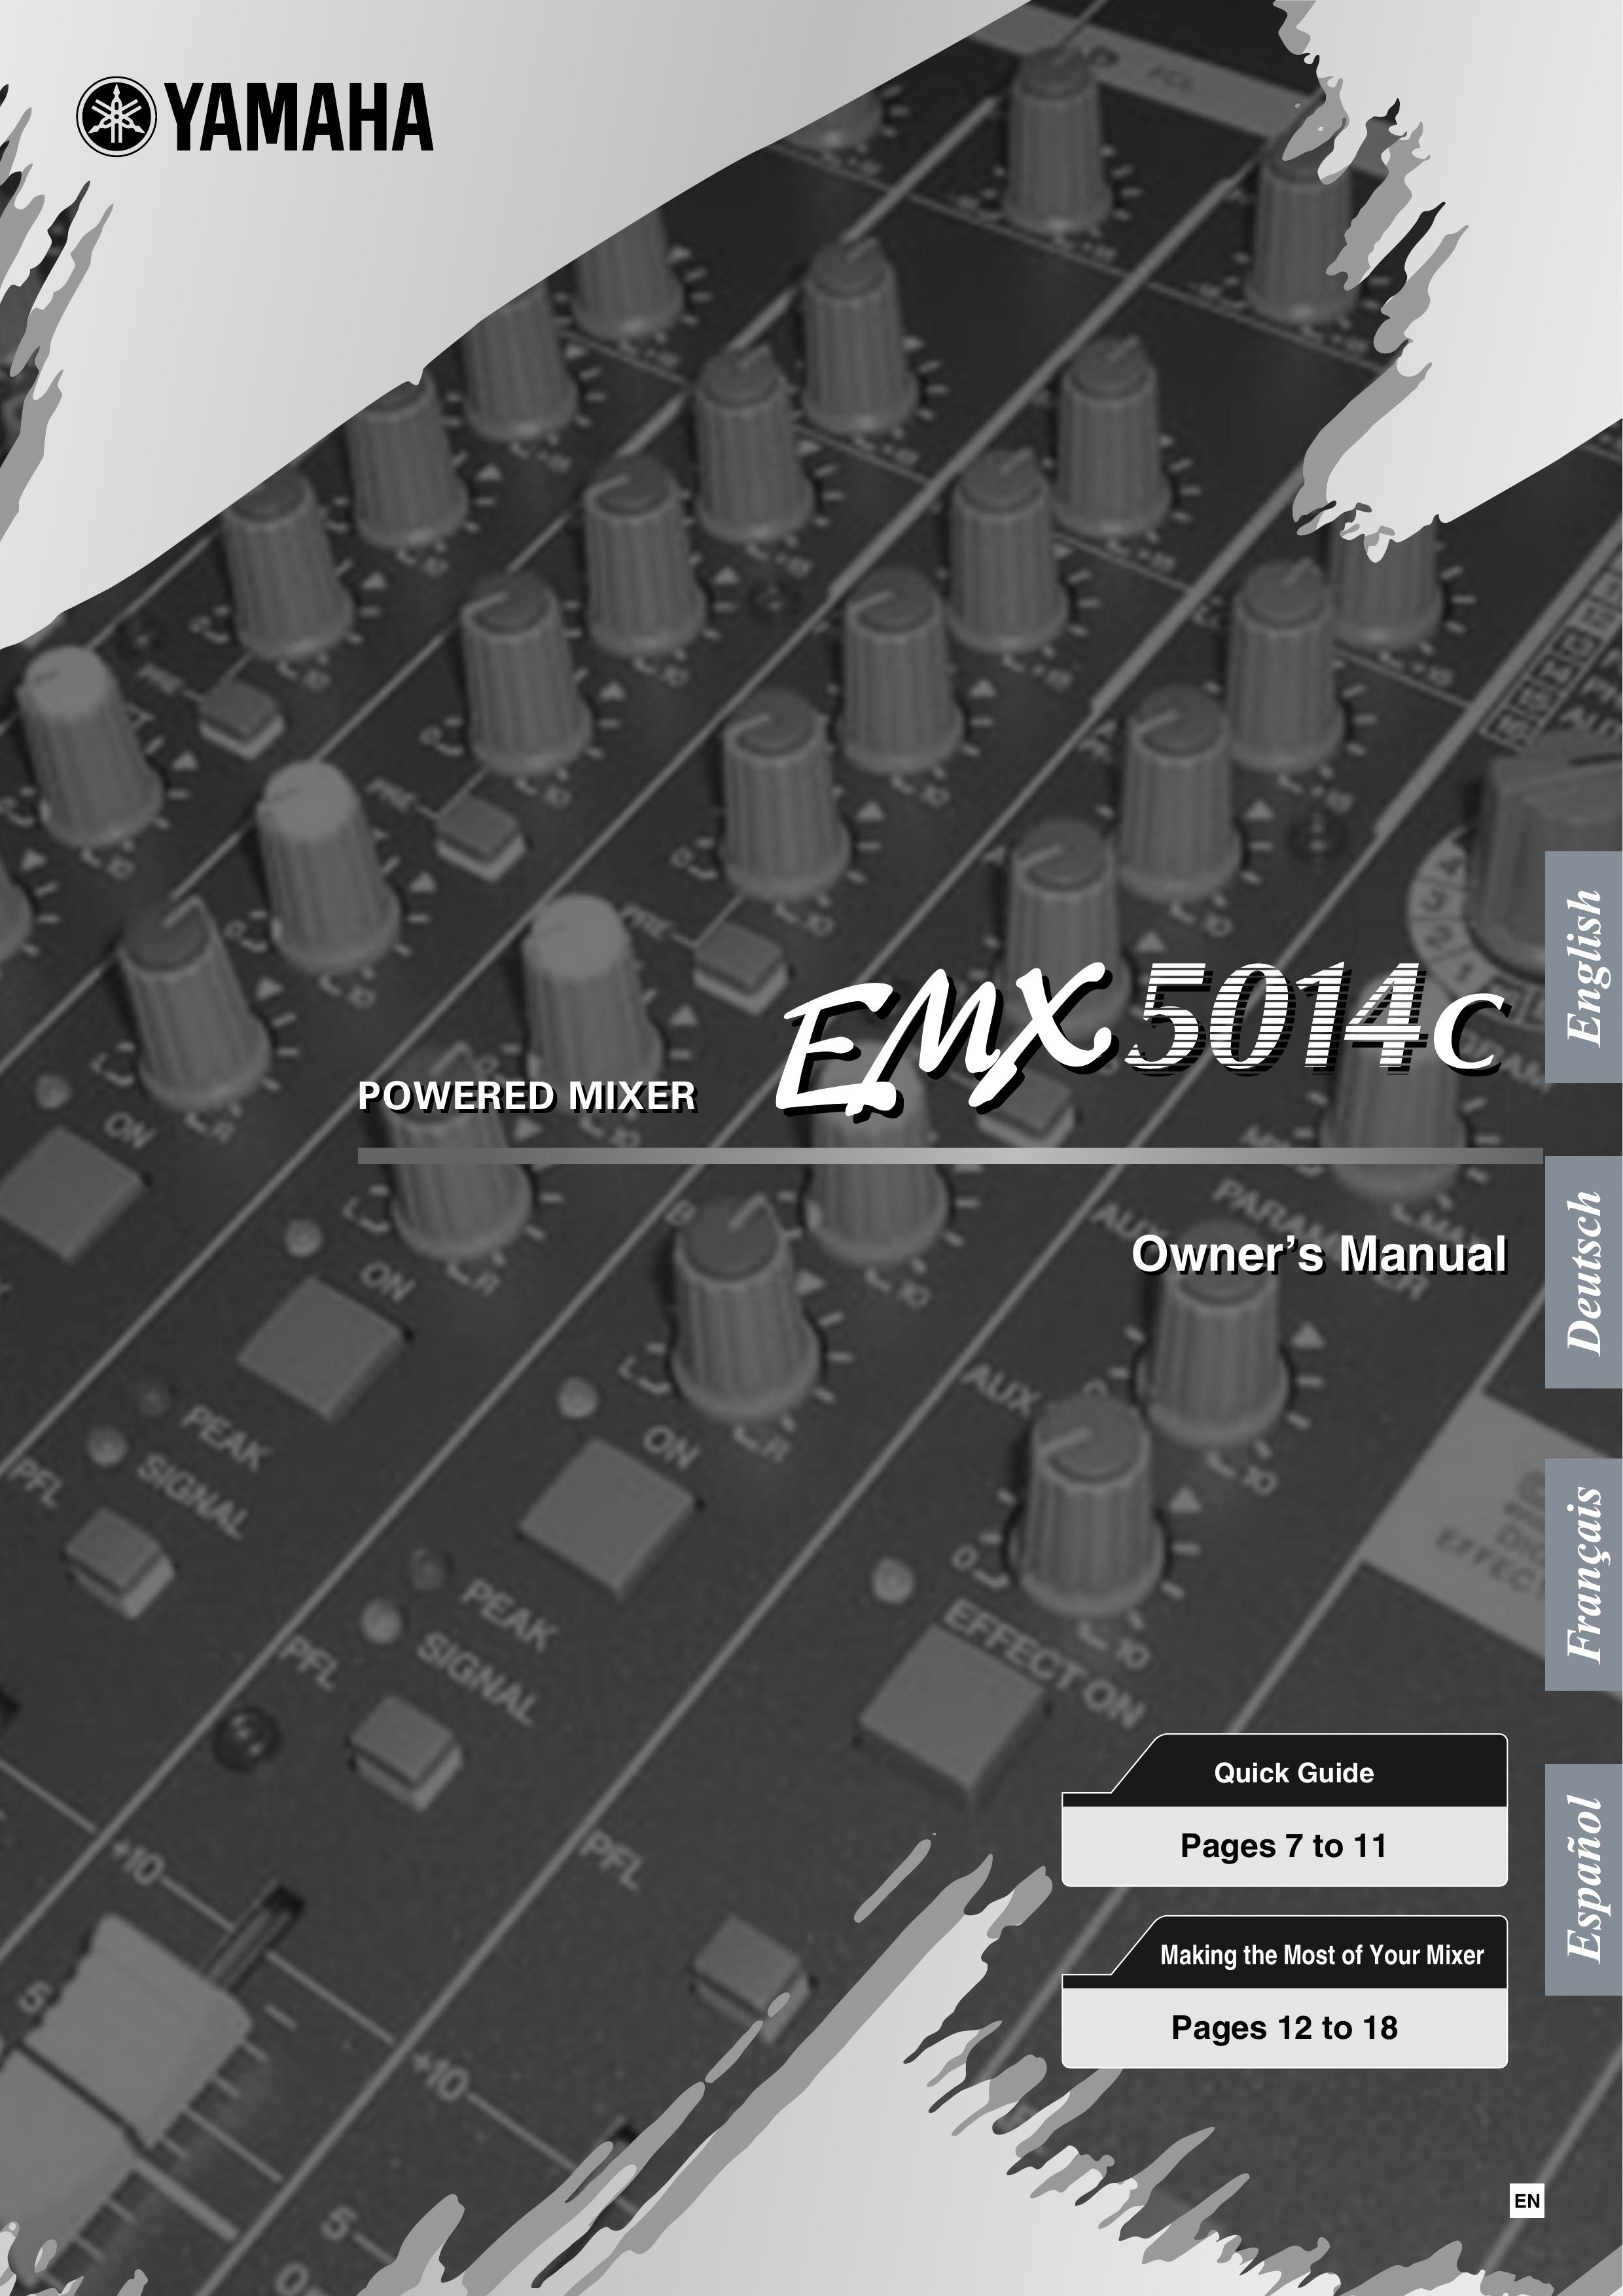 Yamaha EMX5014C DJ Equipment User Manual